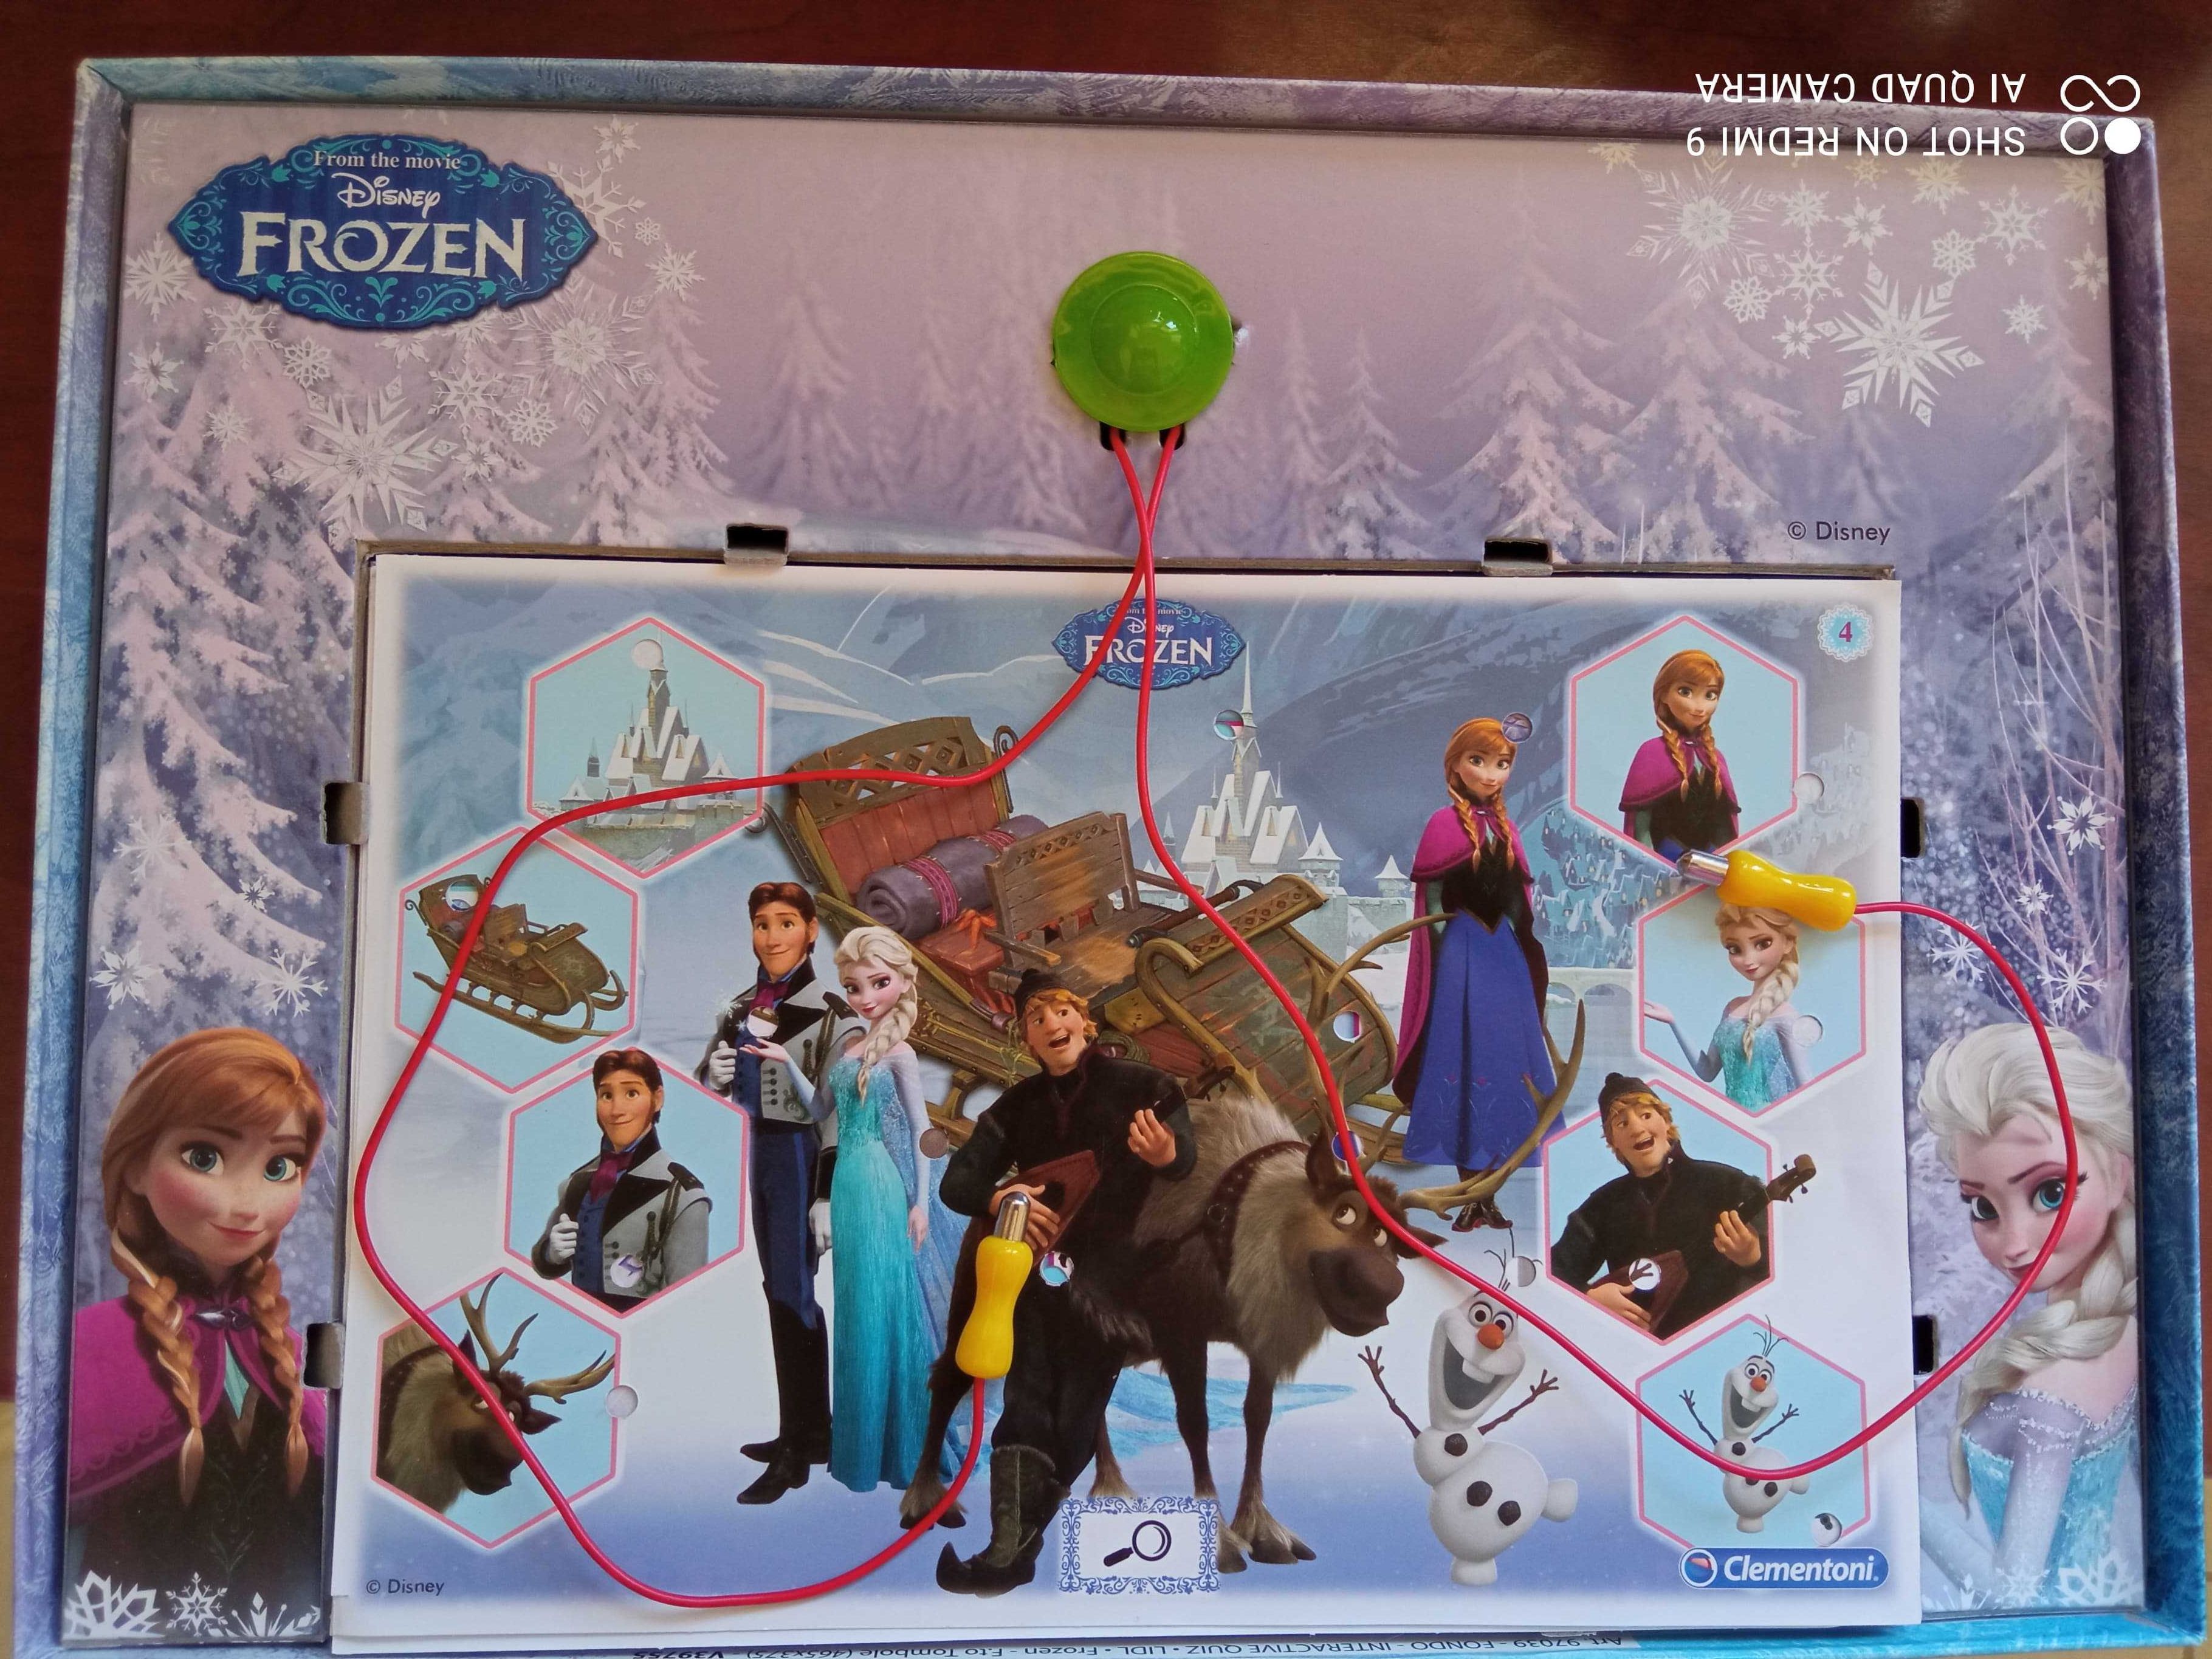 Quiz interaktywny puzzle Kraina lodu Frozen 4-6 lat